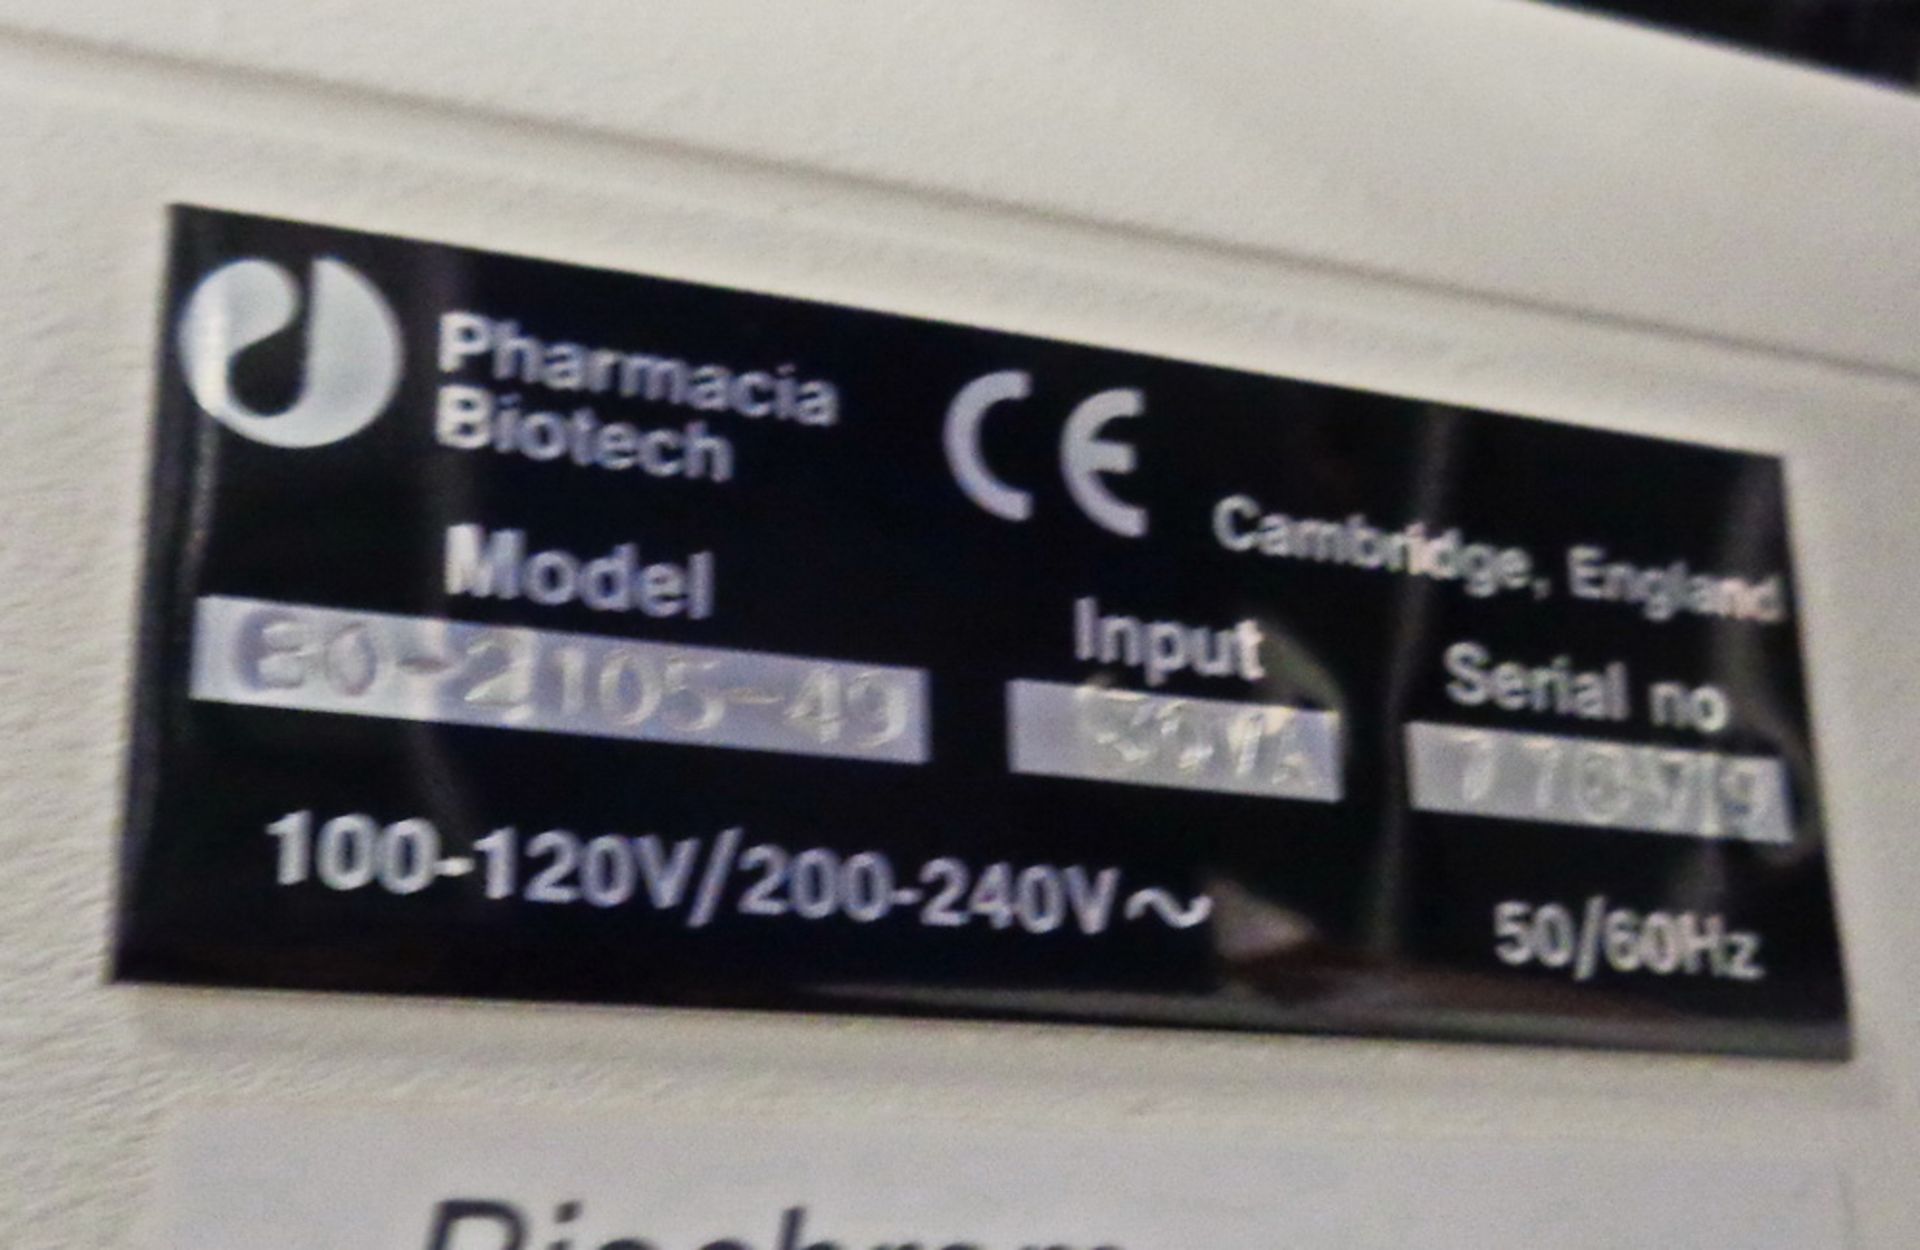 Pharmacia Biotech Temperature Control Unit, Model EO-2105-49, S/N 778-719 - Image 2 of 2